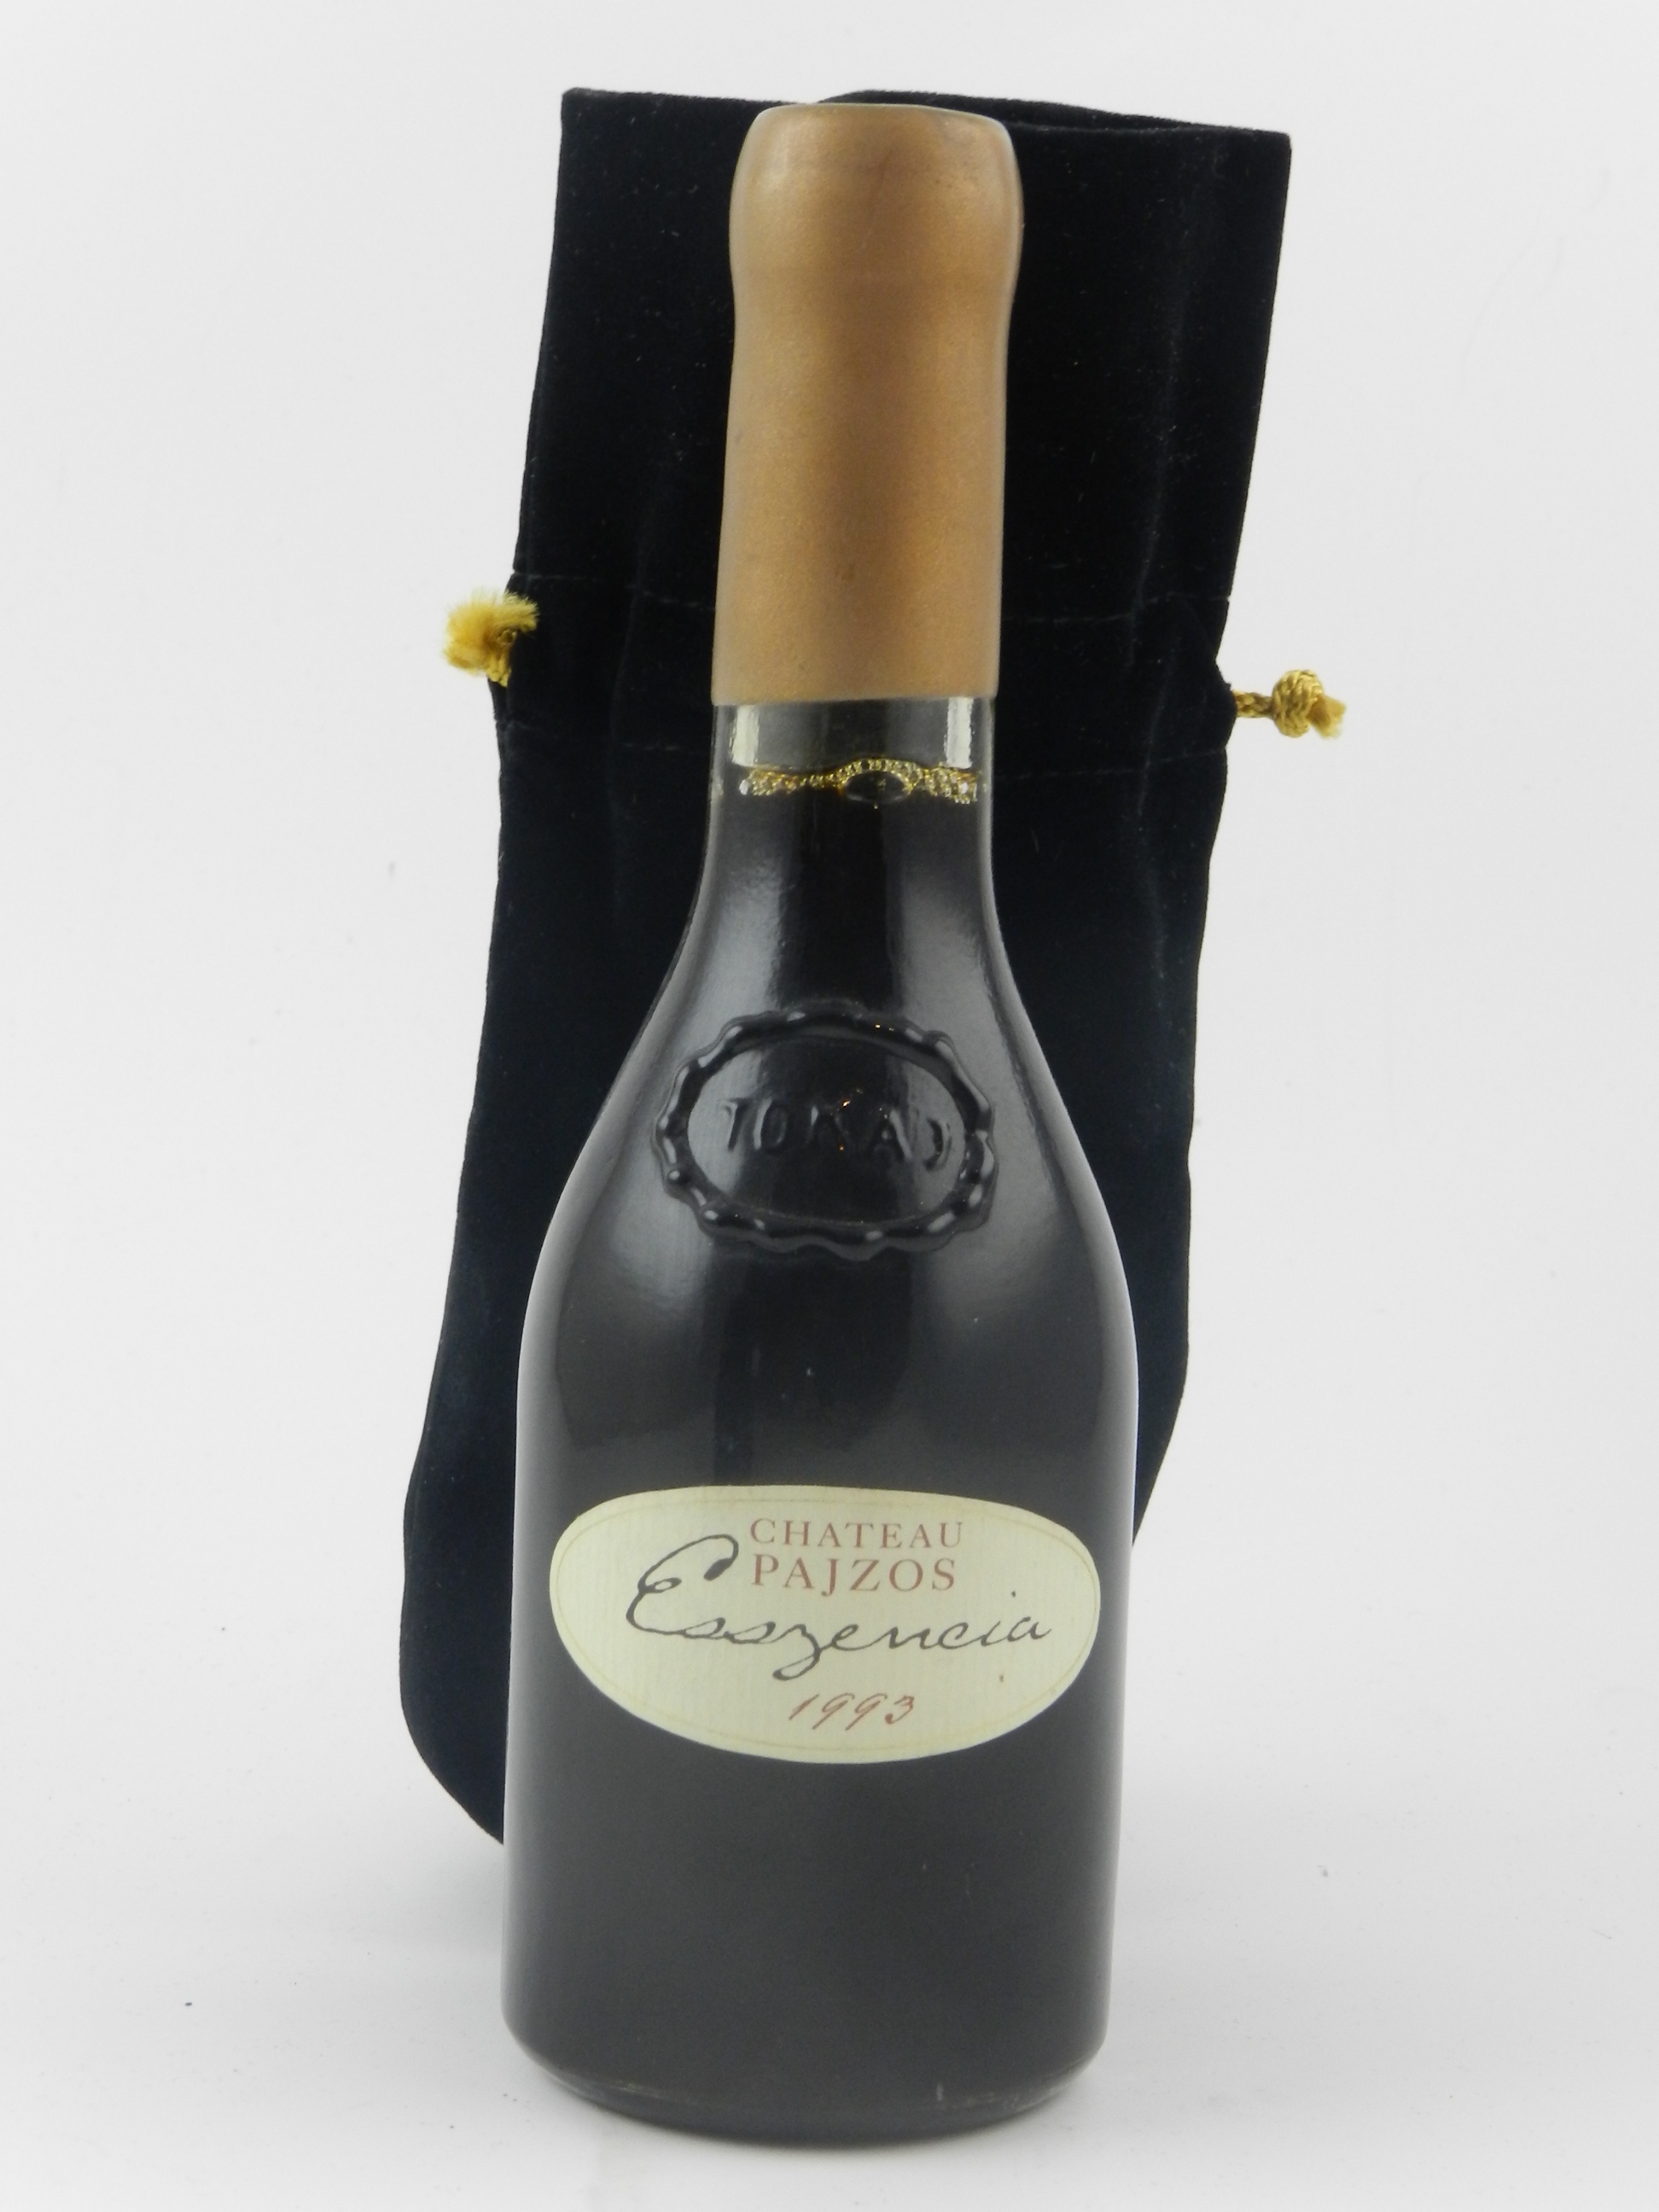 A quarter bottle of Chateau Pajzos essen - Image 2 of 2